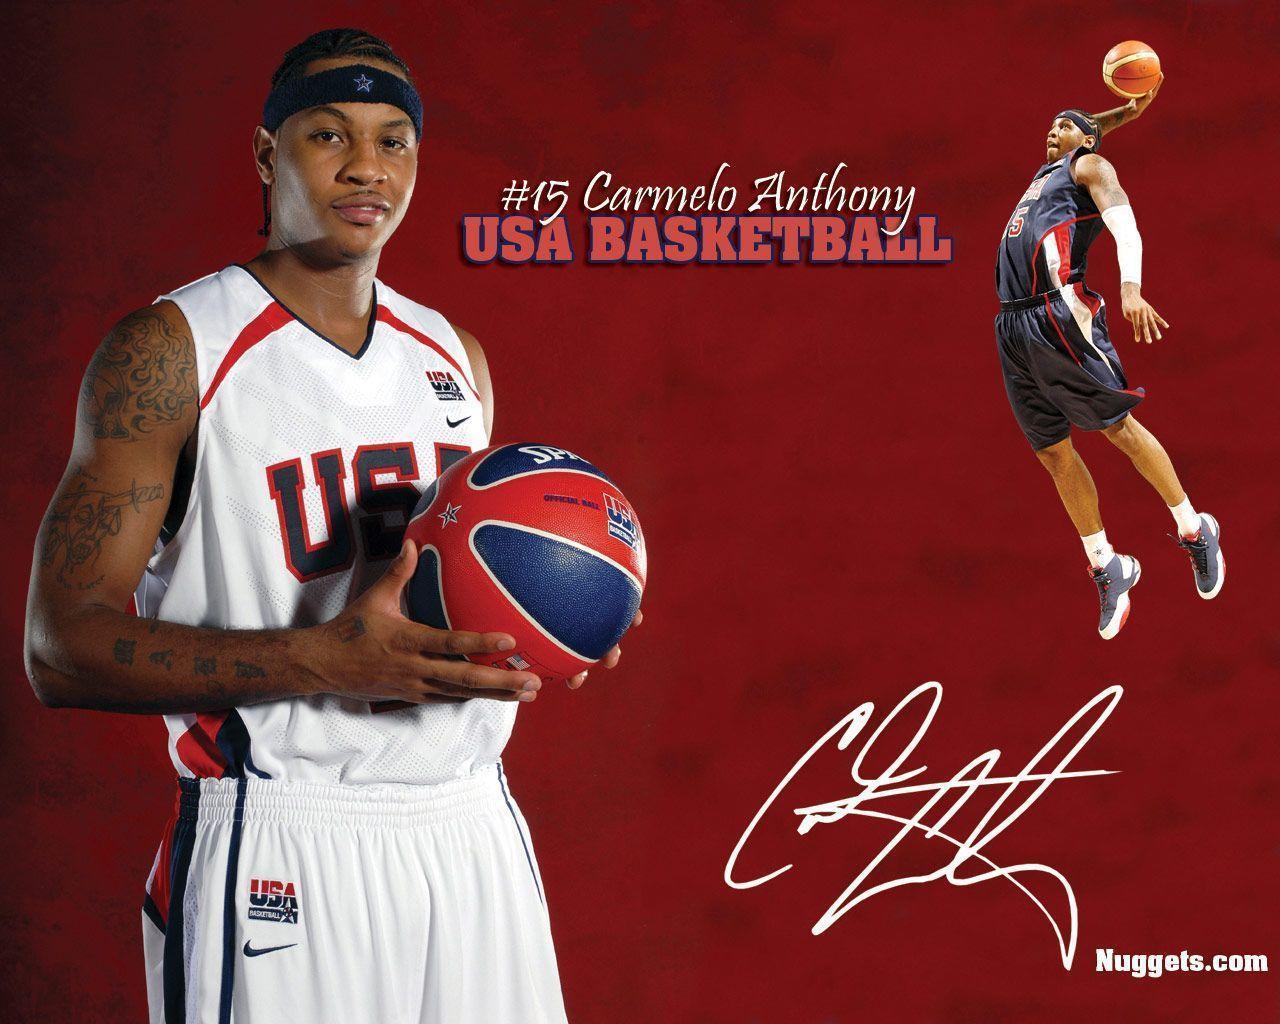 Carmelo Anthony USA Team Wallpaper. Basketball Wallpaper at